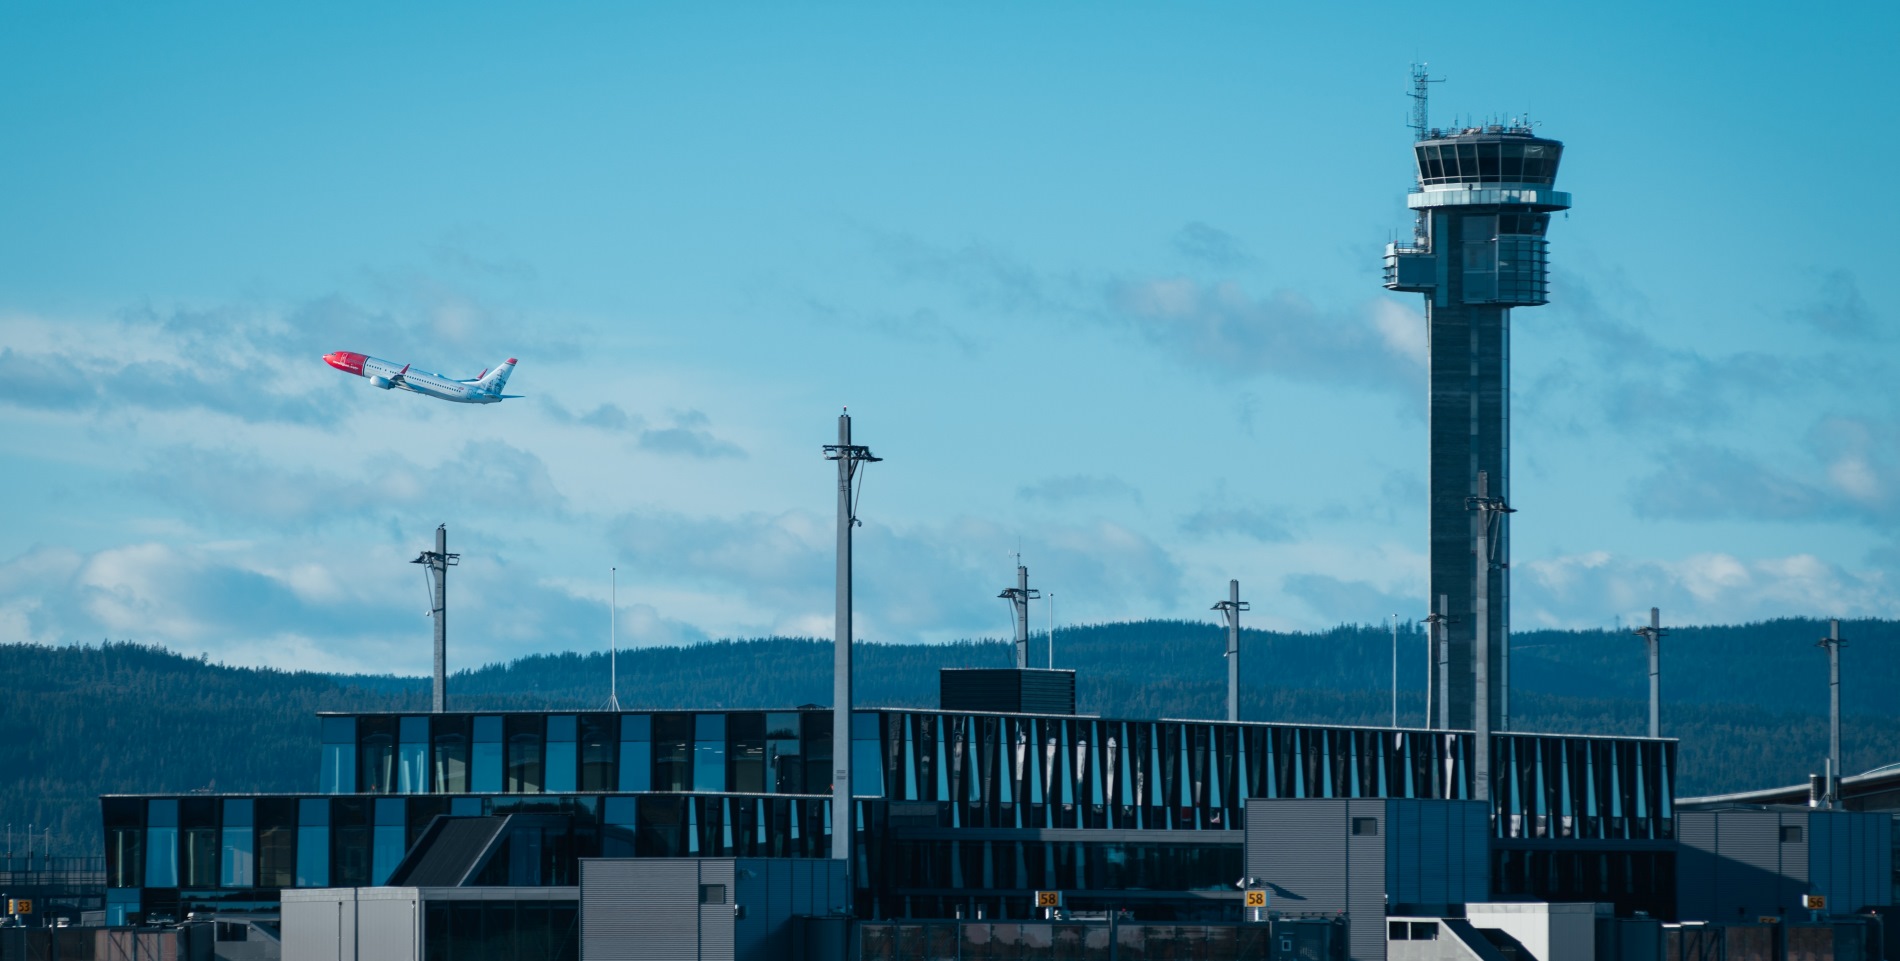 Oslo airport, Norway